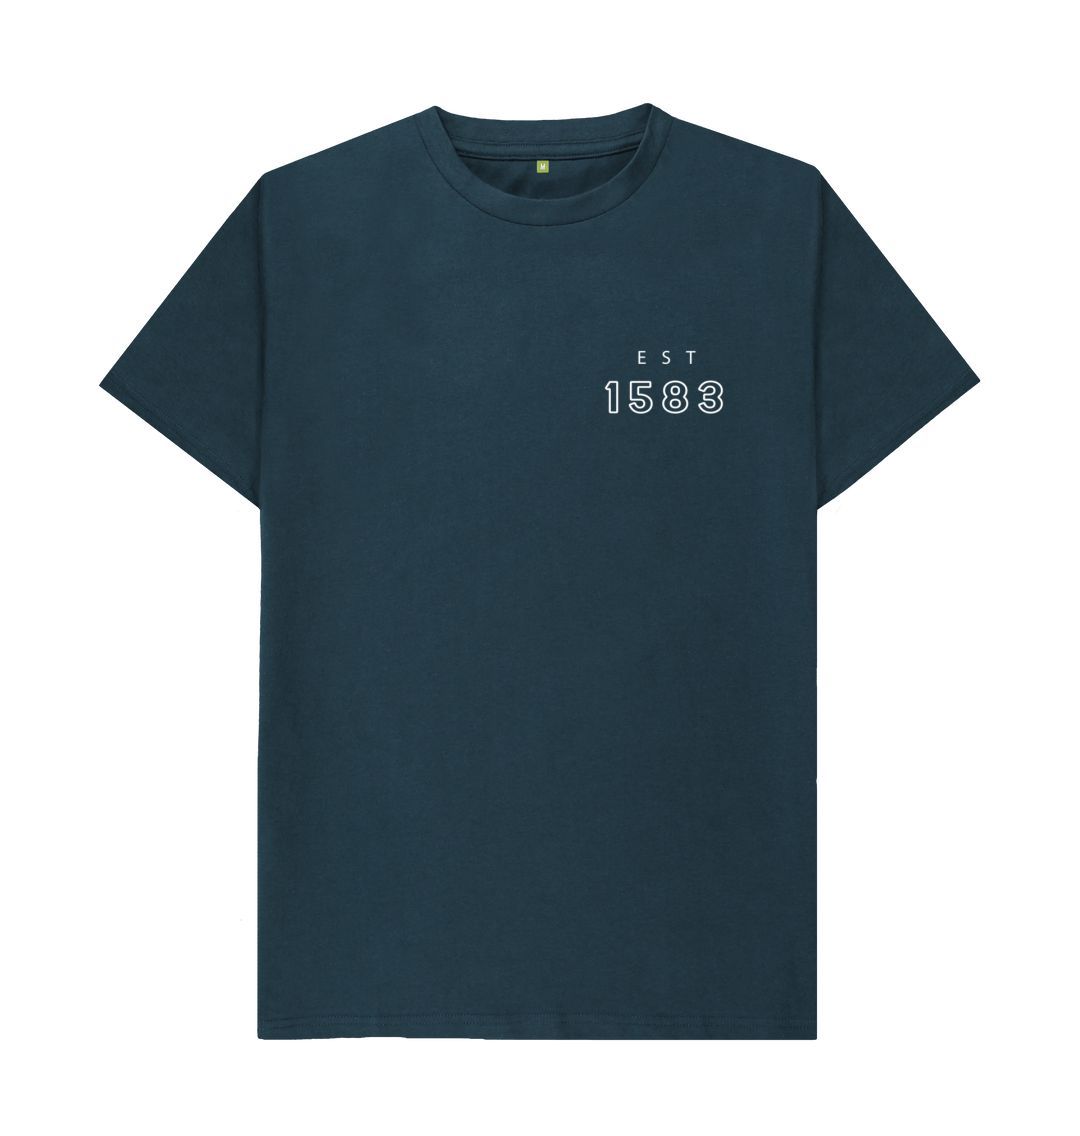 Denim Blue Teviot Row House Coordinates Design T-Shirt